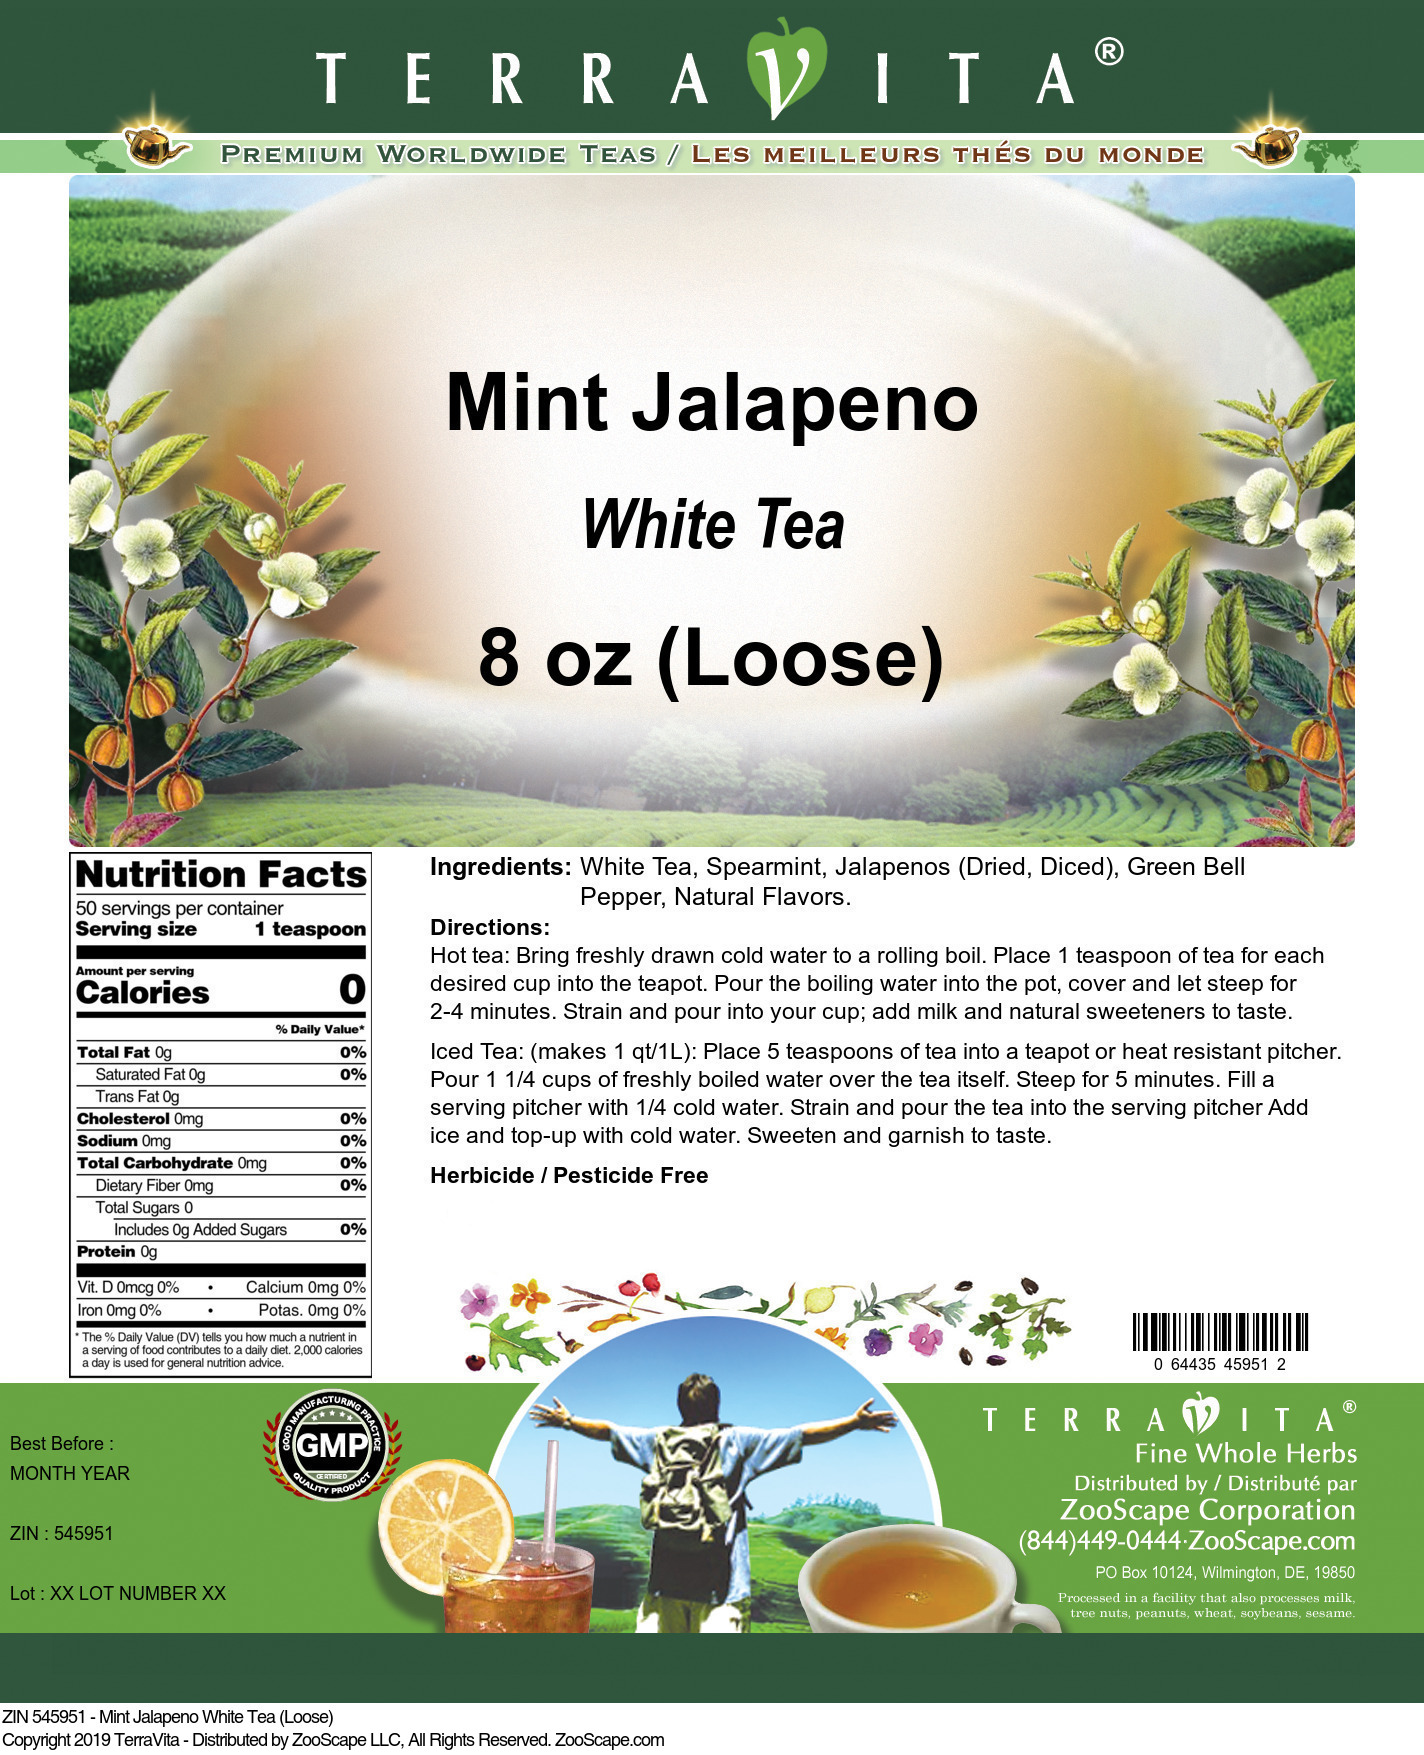 Mint Jalapeno White Tea (Loose) - Label